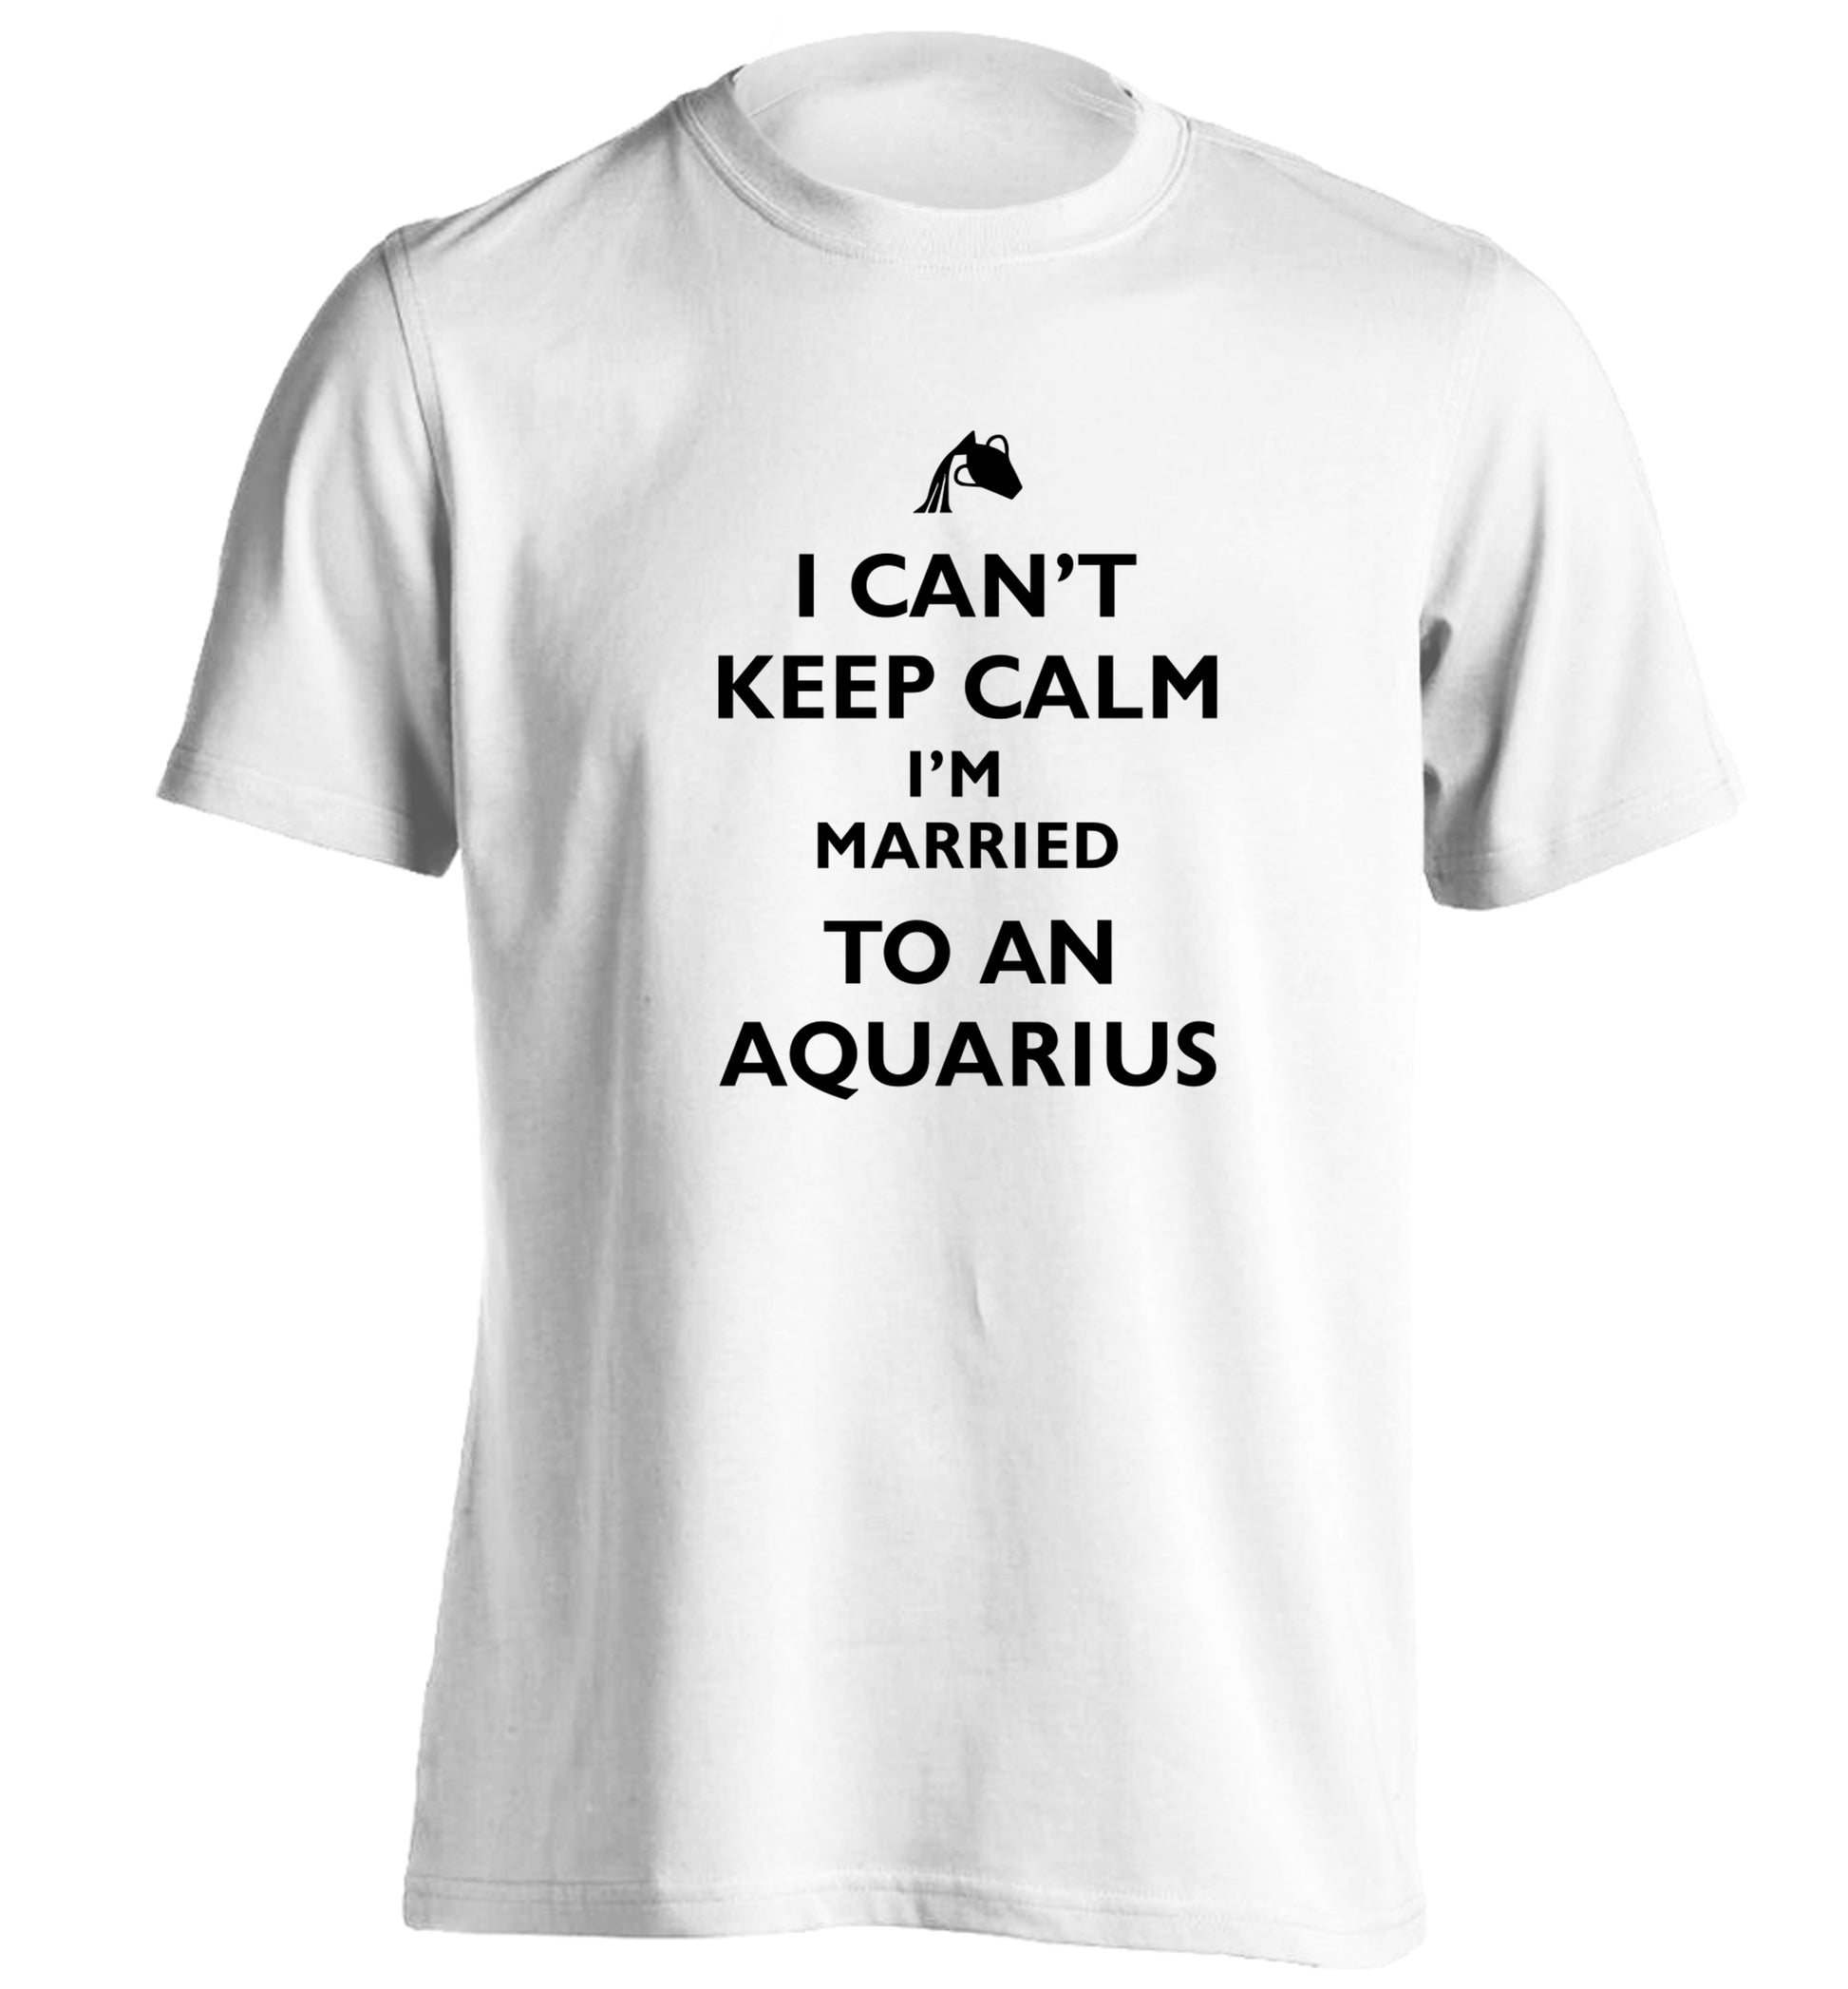 I can't keep calm I'm married to an aquarius adults unisex white Tshirt 2XL